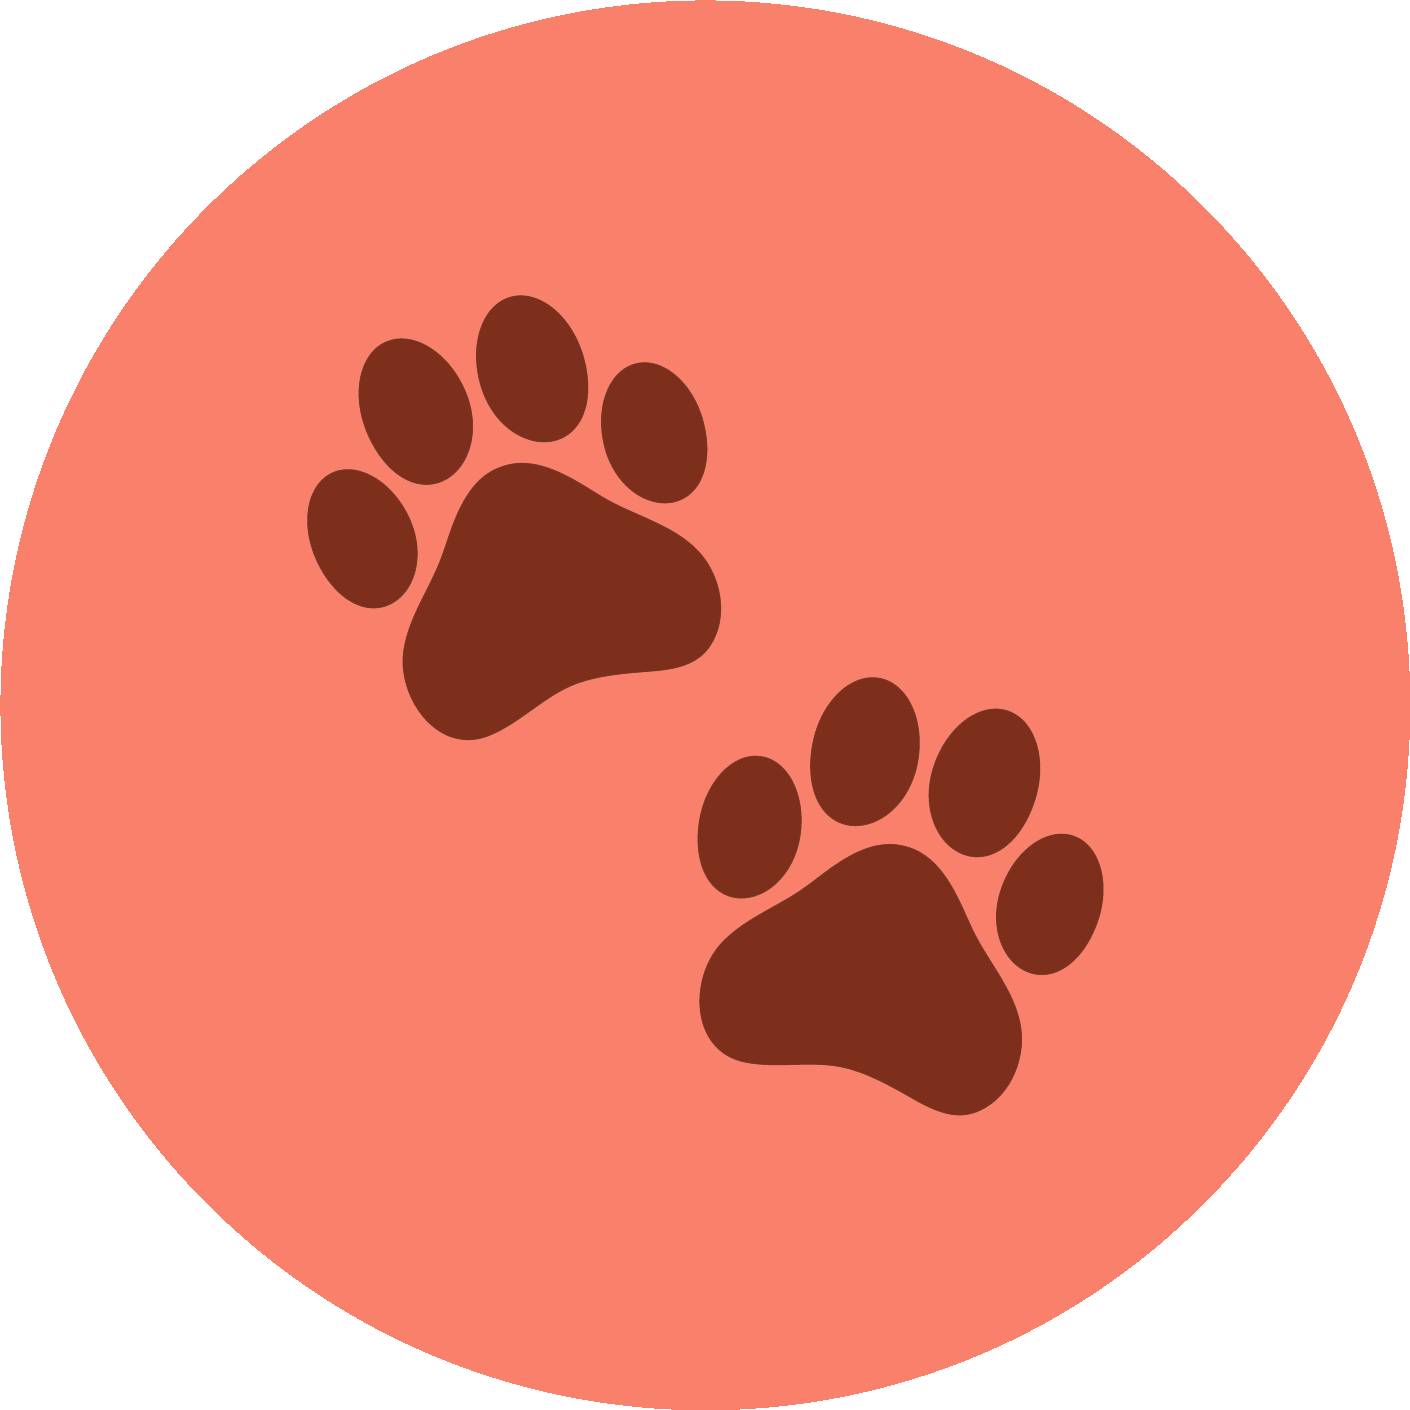 Pet-friendly logo with a paw print icon